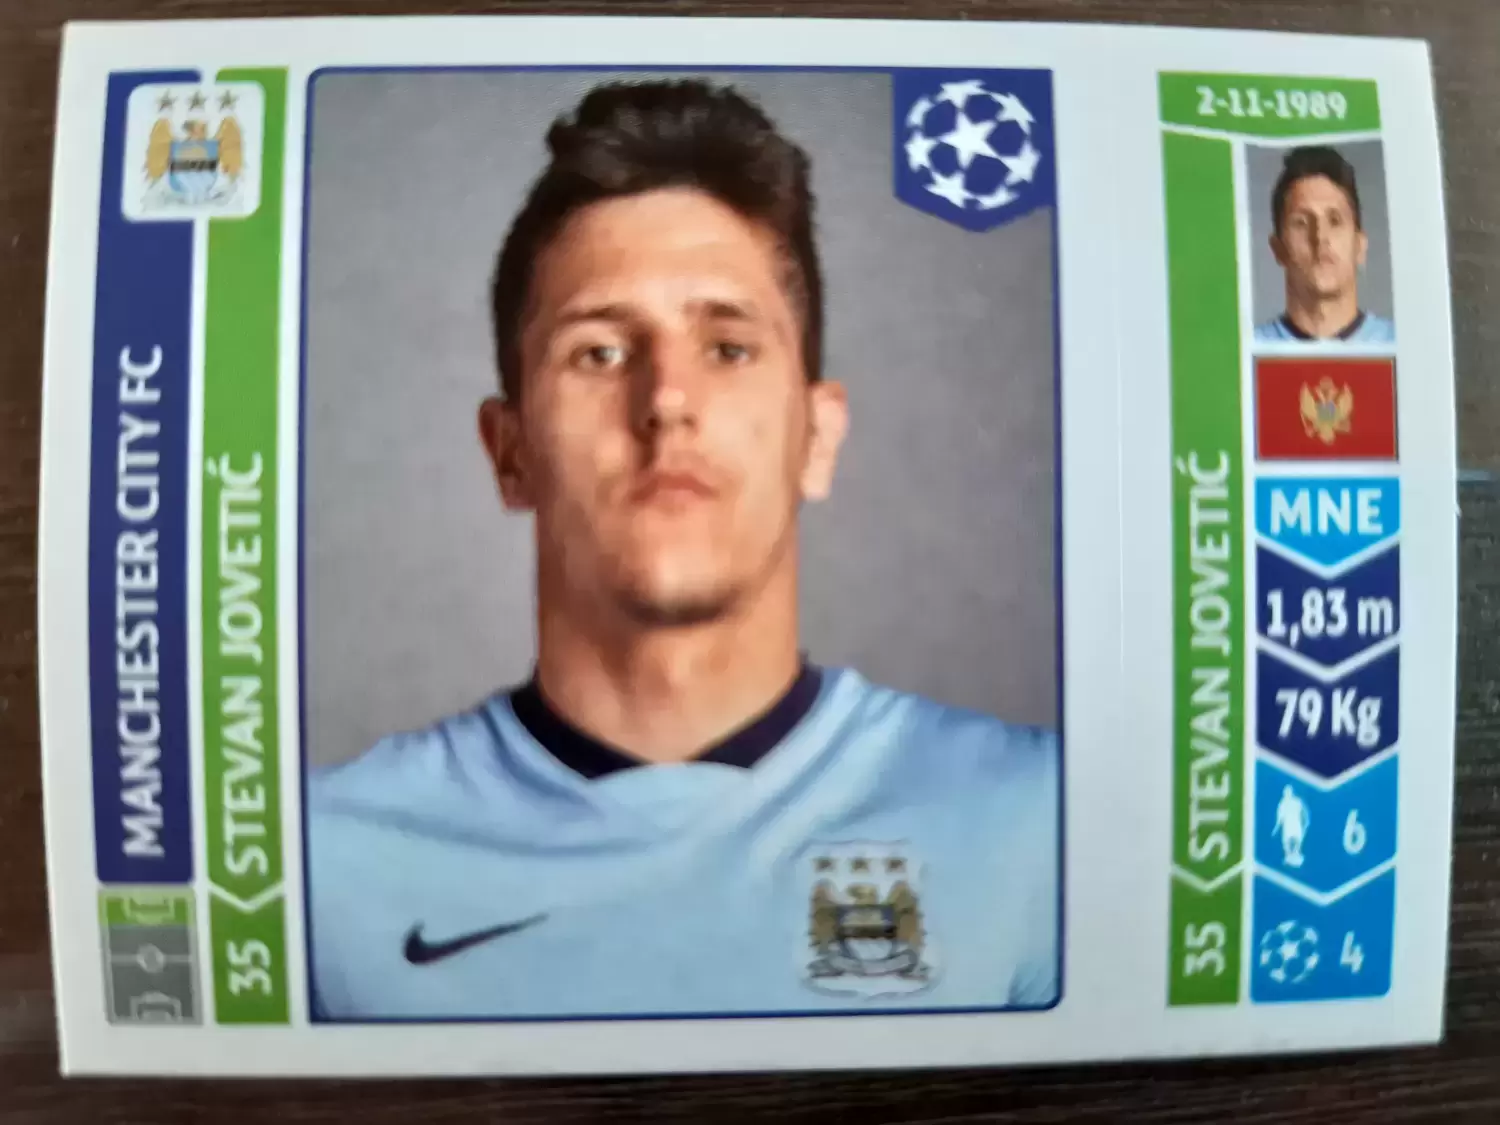 UEFA Champions League 2014-2015 - Stevan Jovetić - Manchester City FC